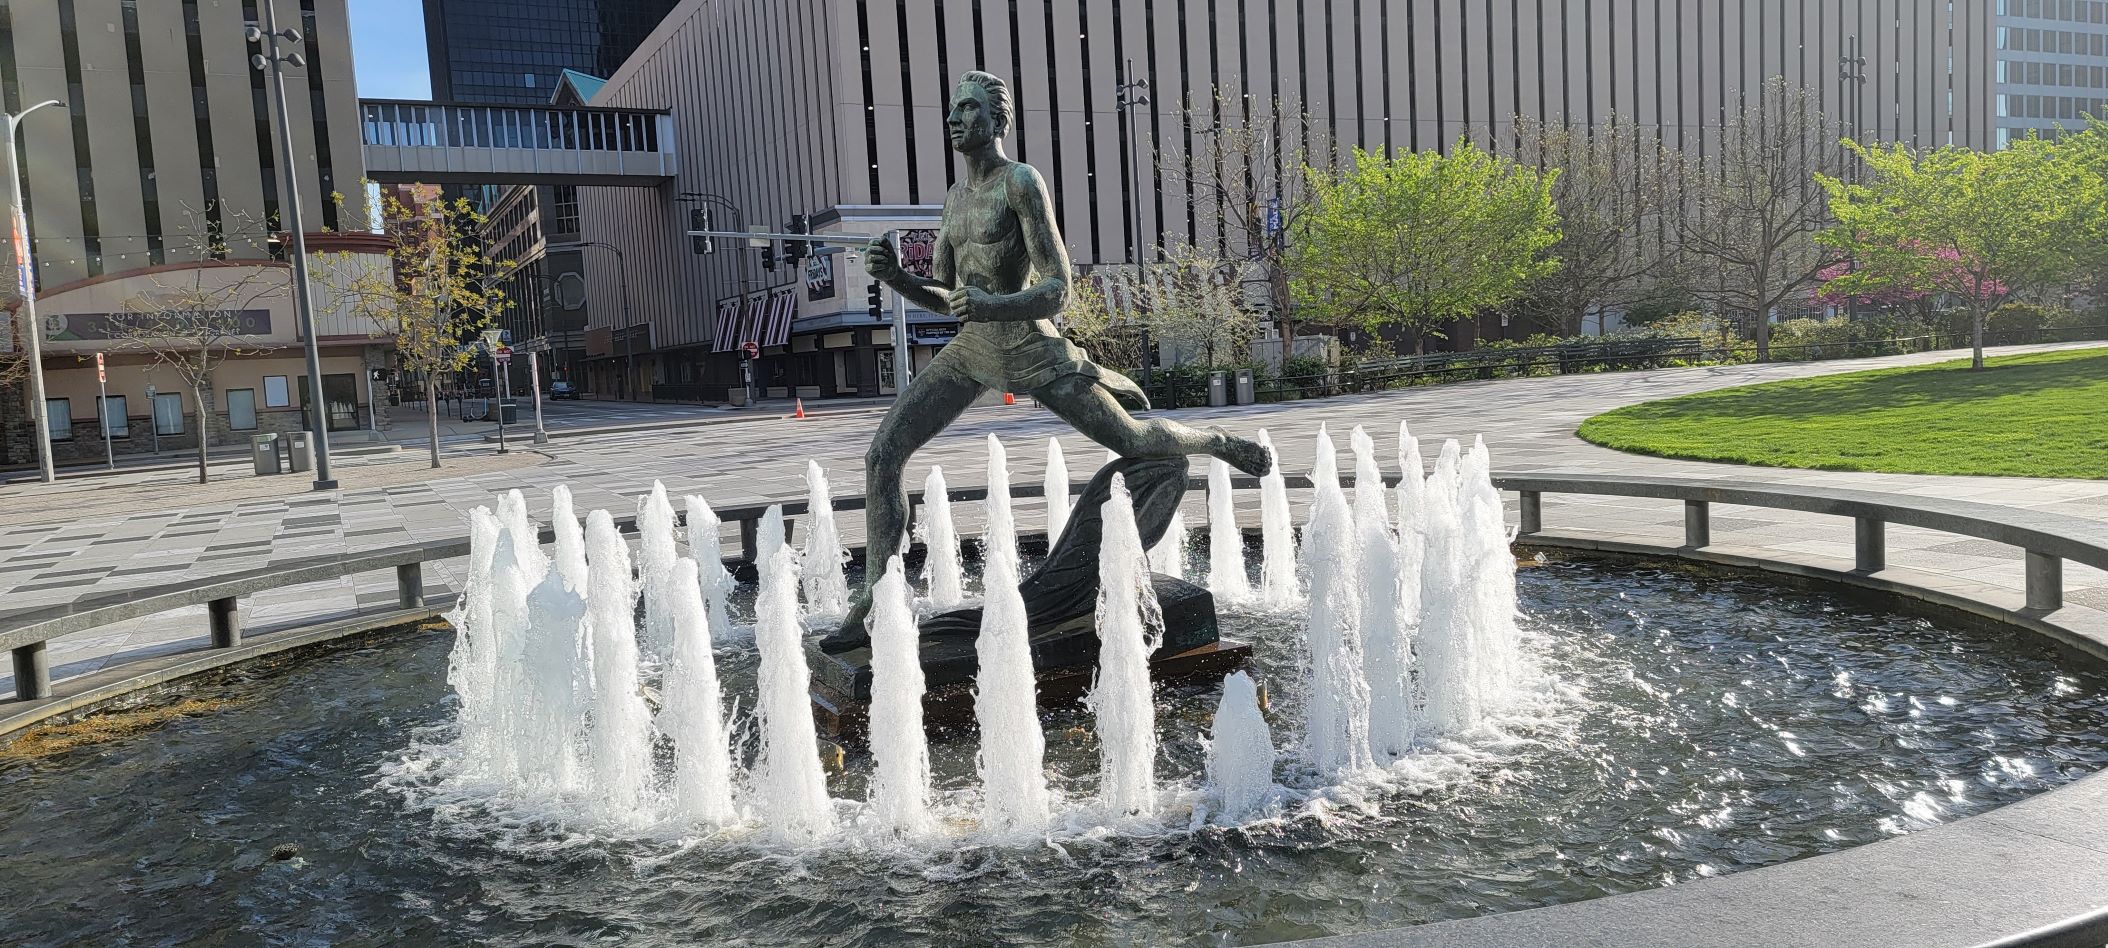 Running Man Statue In Fountain